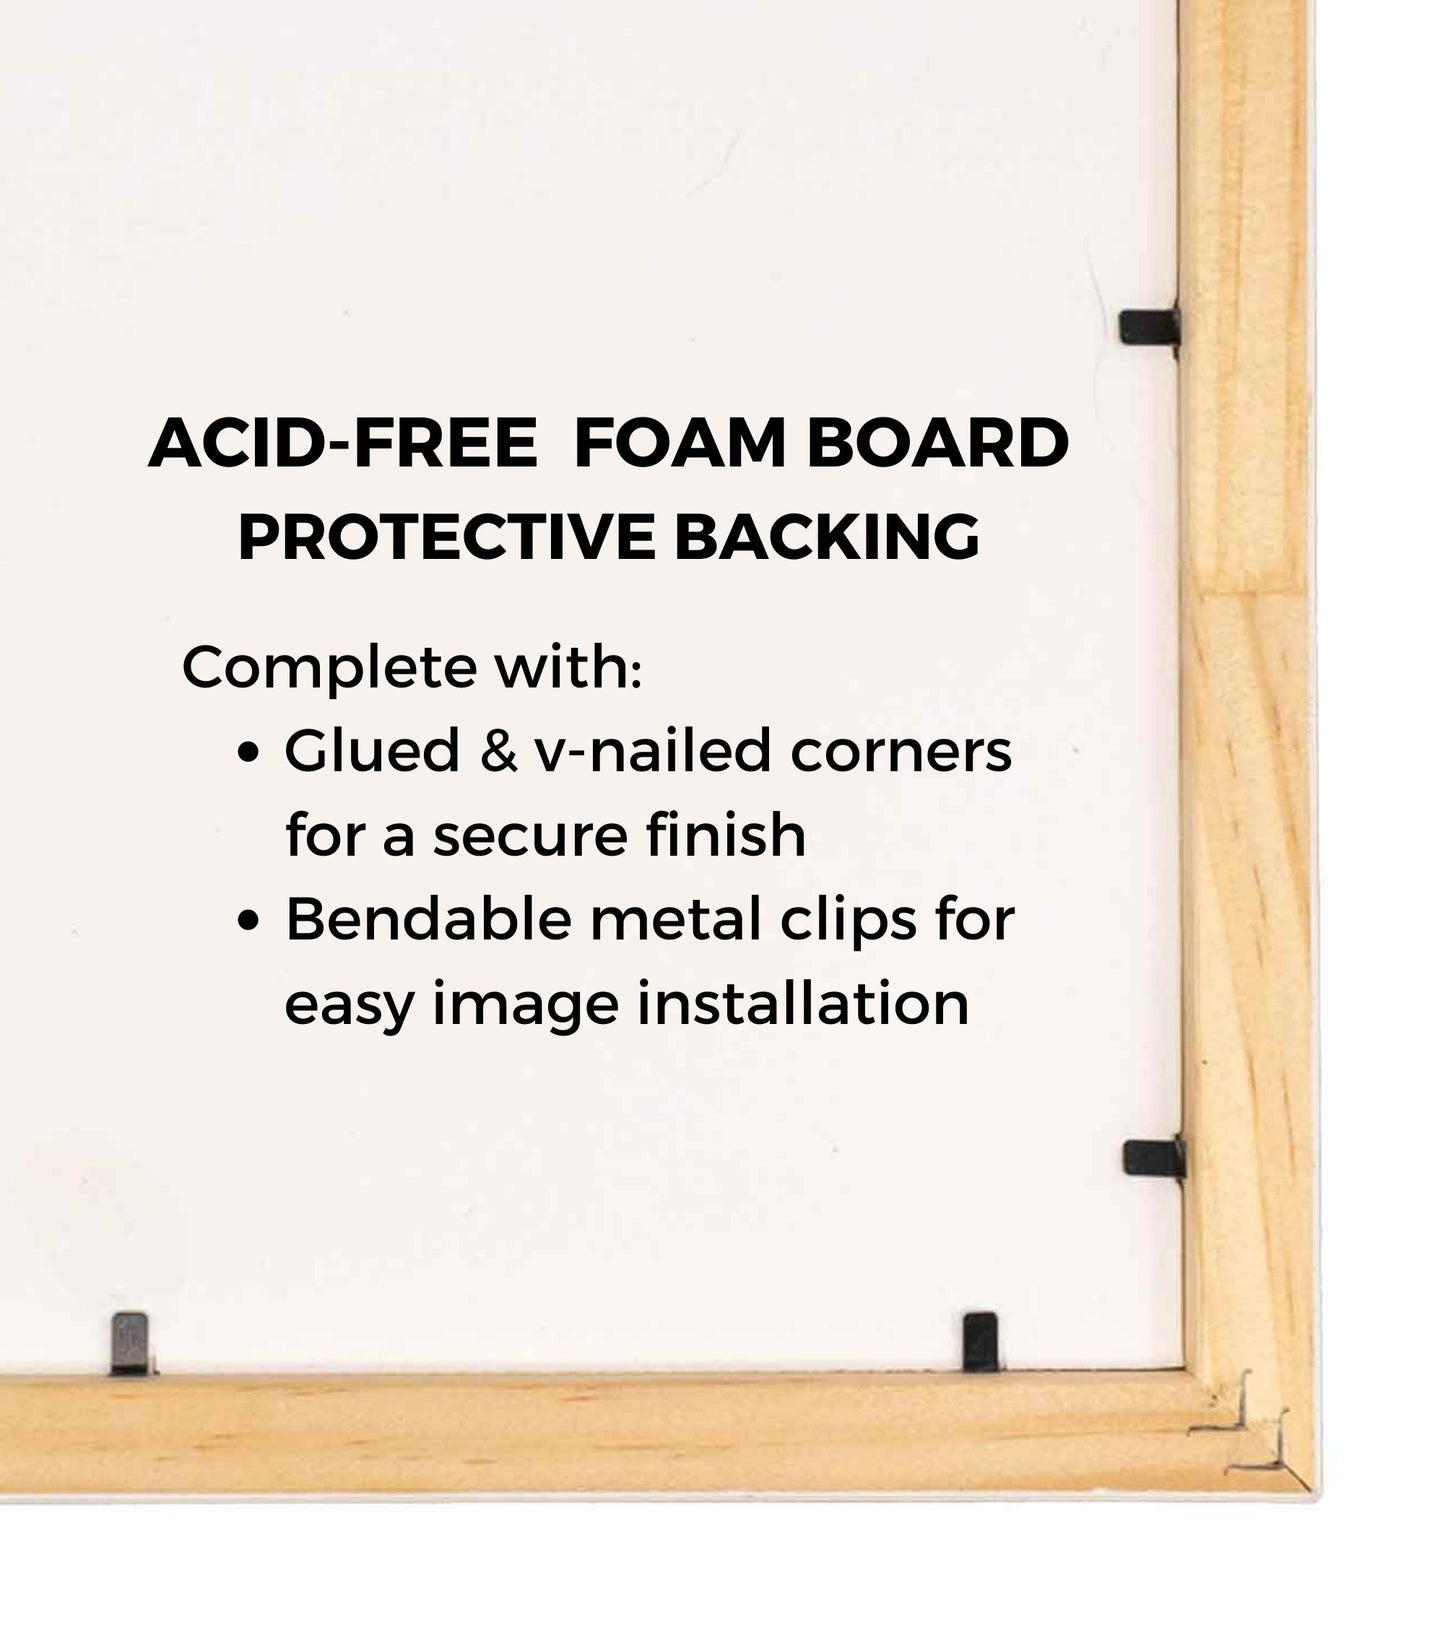 5x11 Frame Black Wood Picture Frame - UV Acrylic Plexiglass, Foam Board Backing aaa Hanging Hardware Included